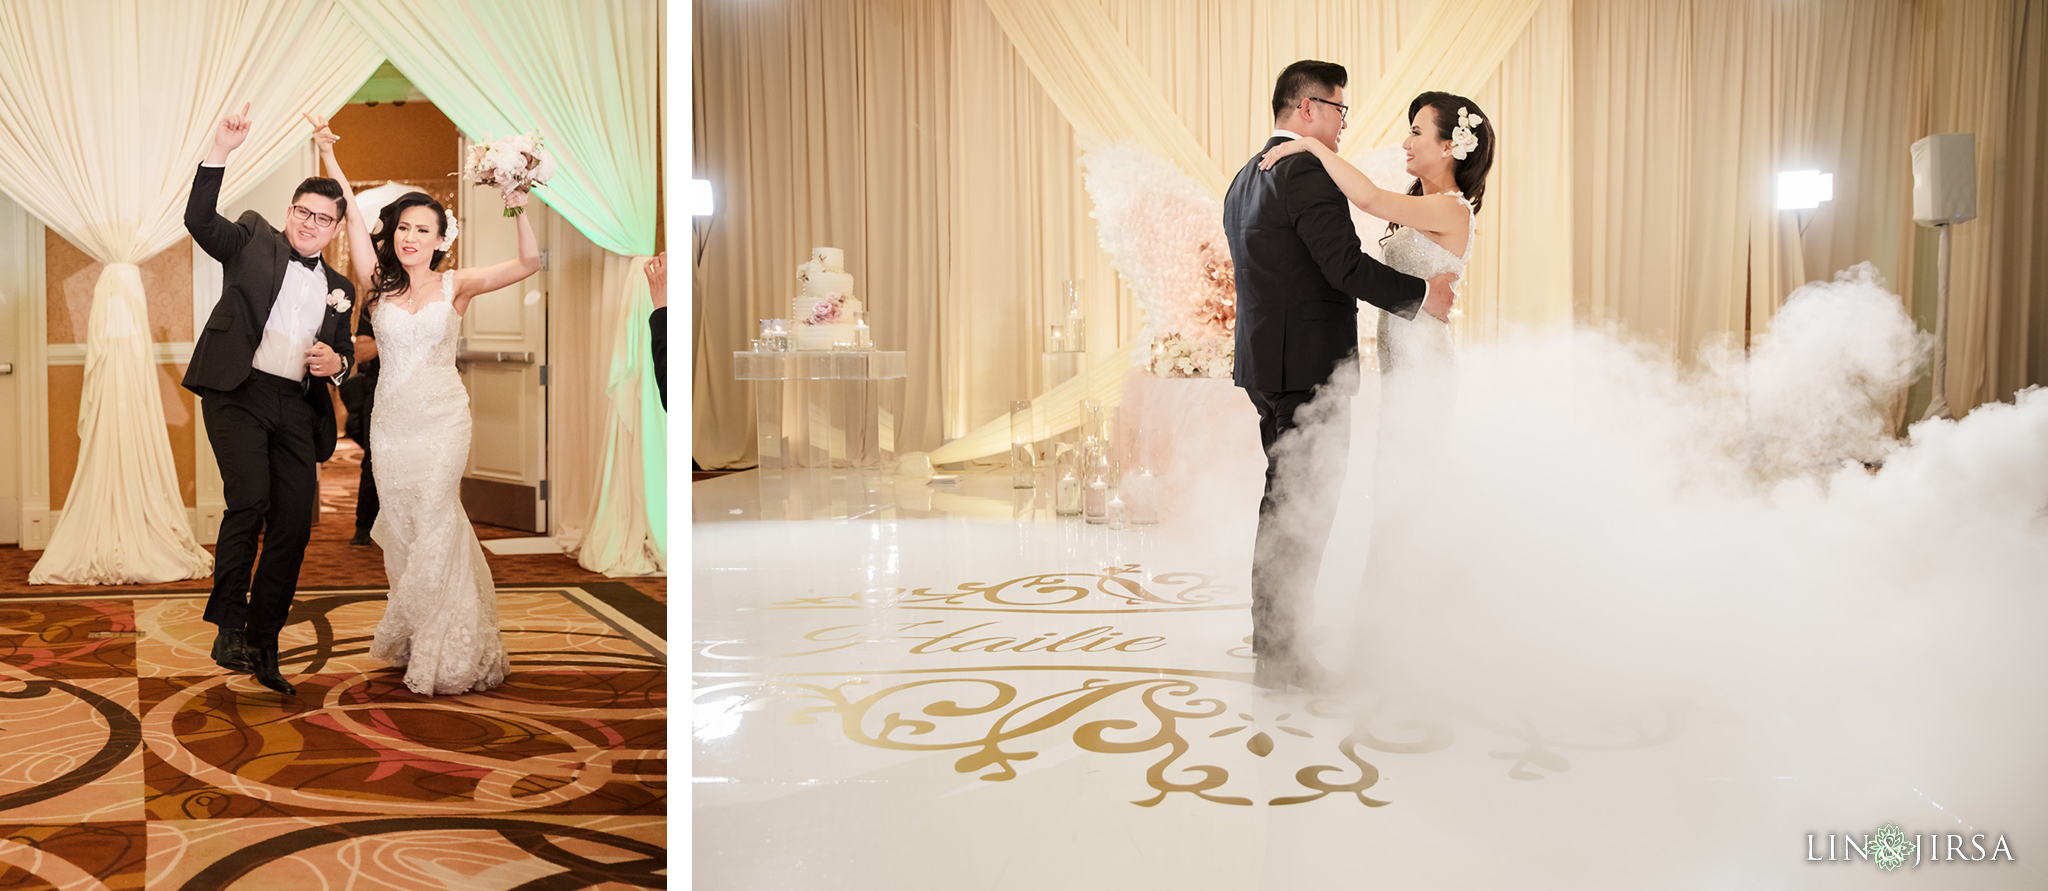 32 Hilton Anaheim Vietnamese Wedding Photography